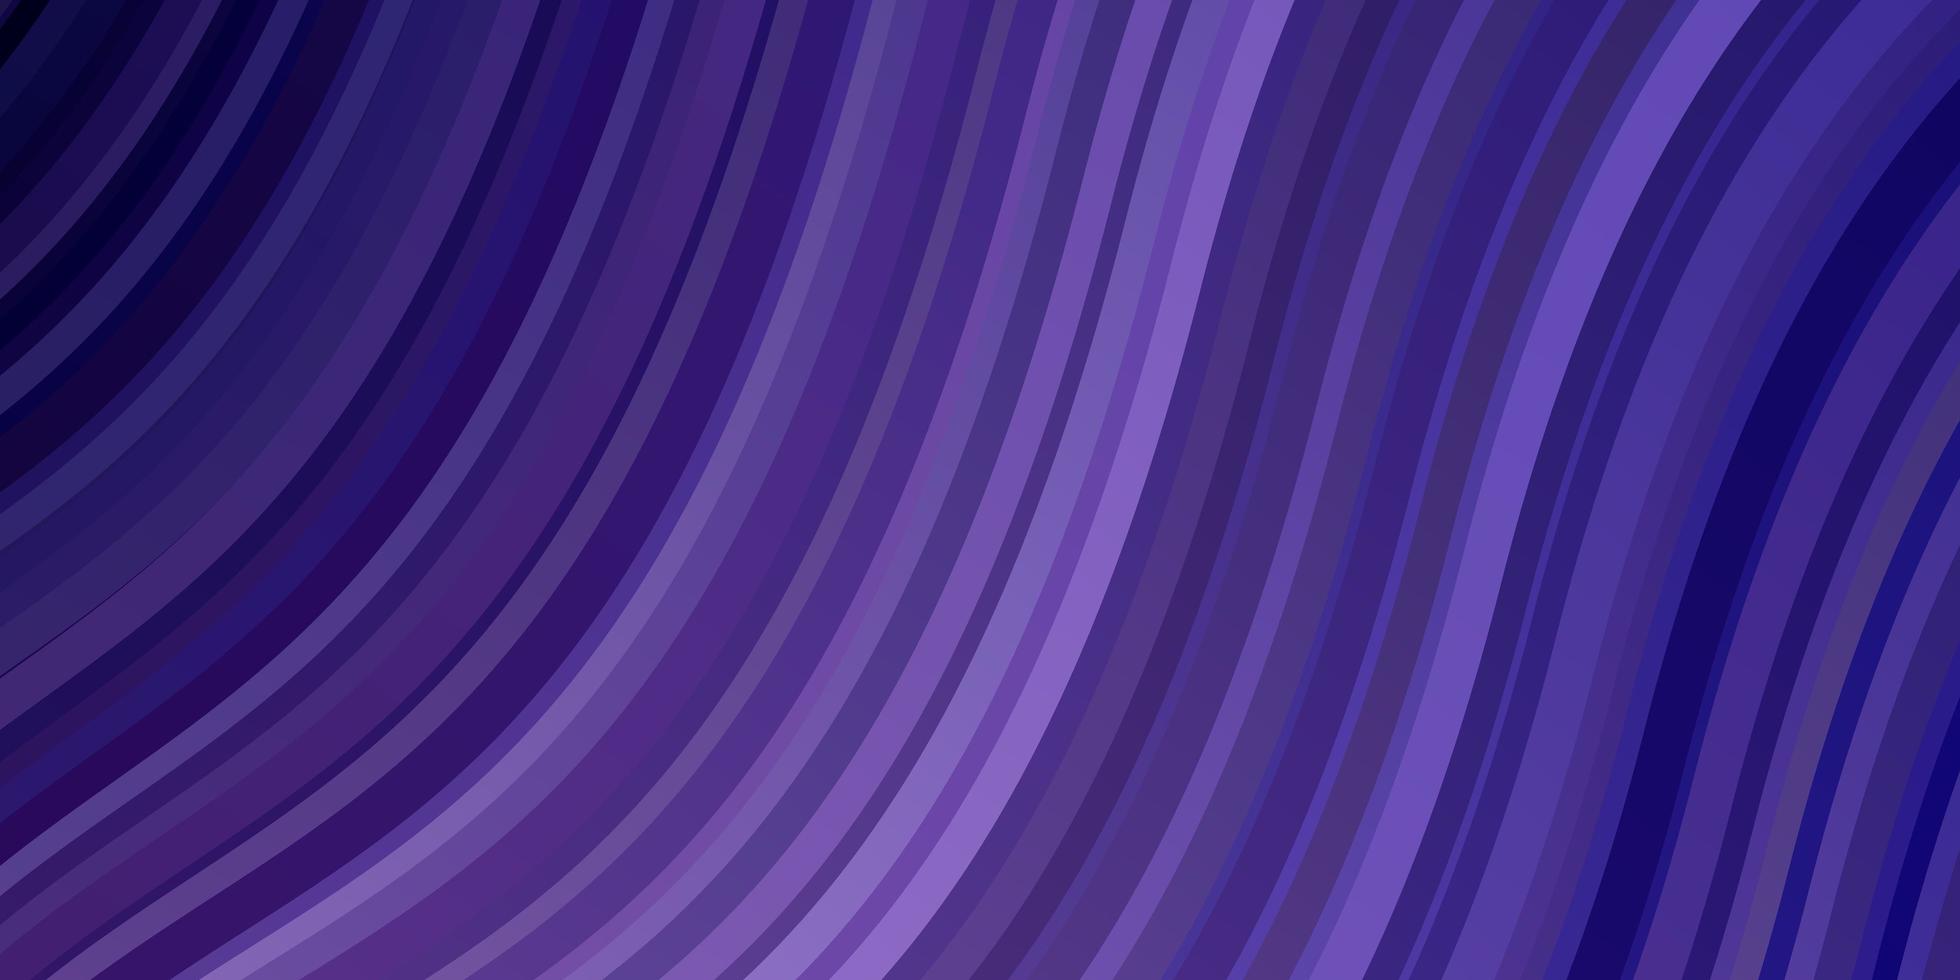 textura de vector púrpura claro con arco circular ilustración colorida con patrón de líneas curvas para páginas de destino de sitios web